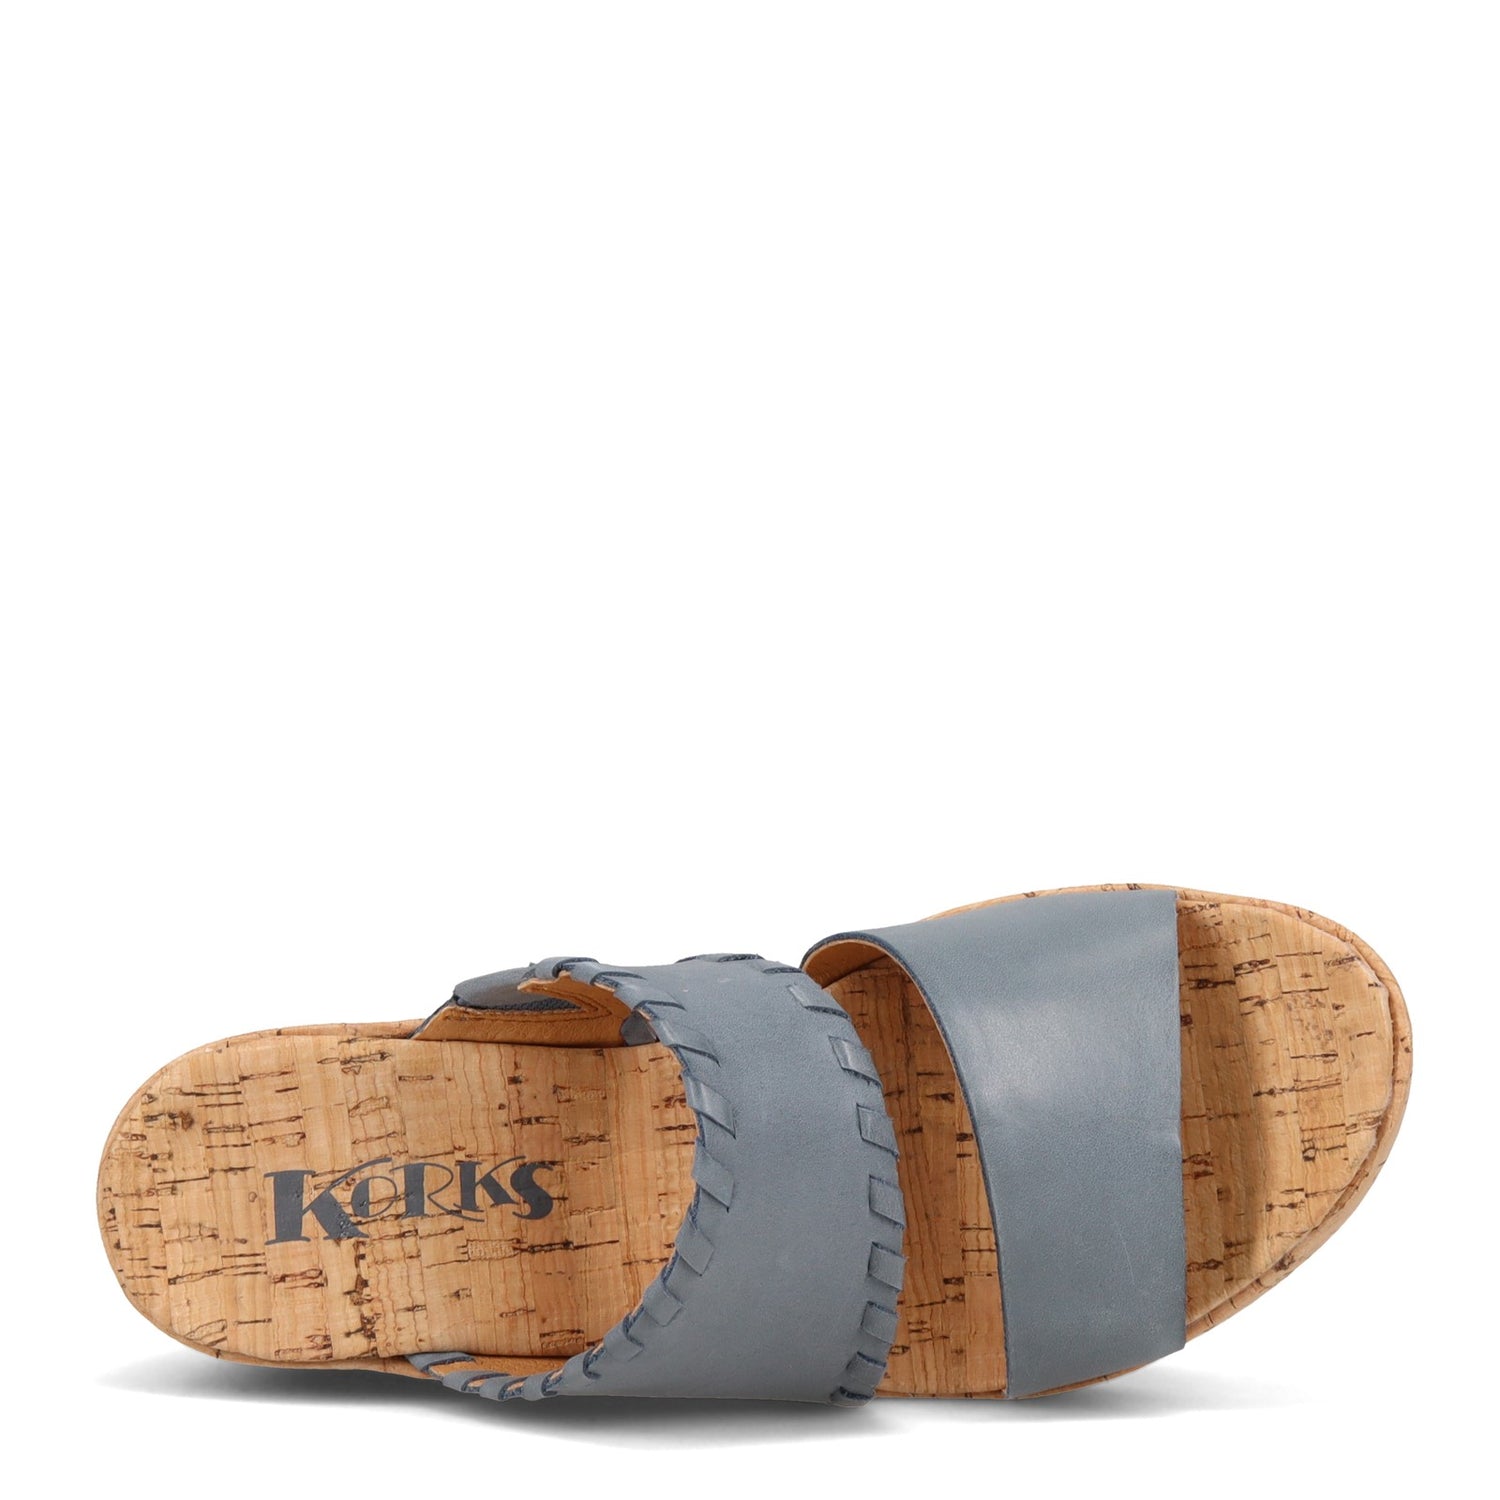 Peltz Shoes  Women's KORKS Kendri Sandal Light Blue KR0000804